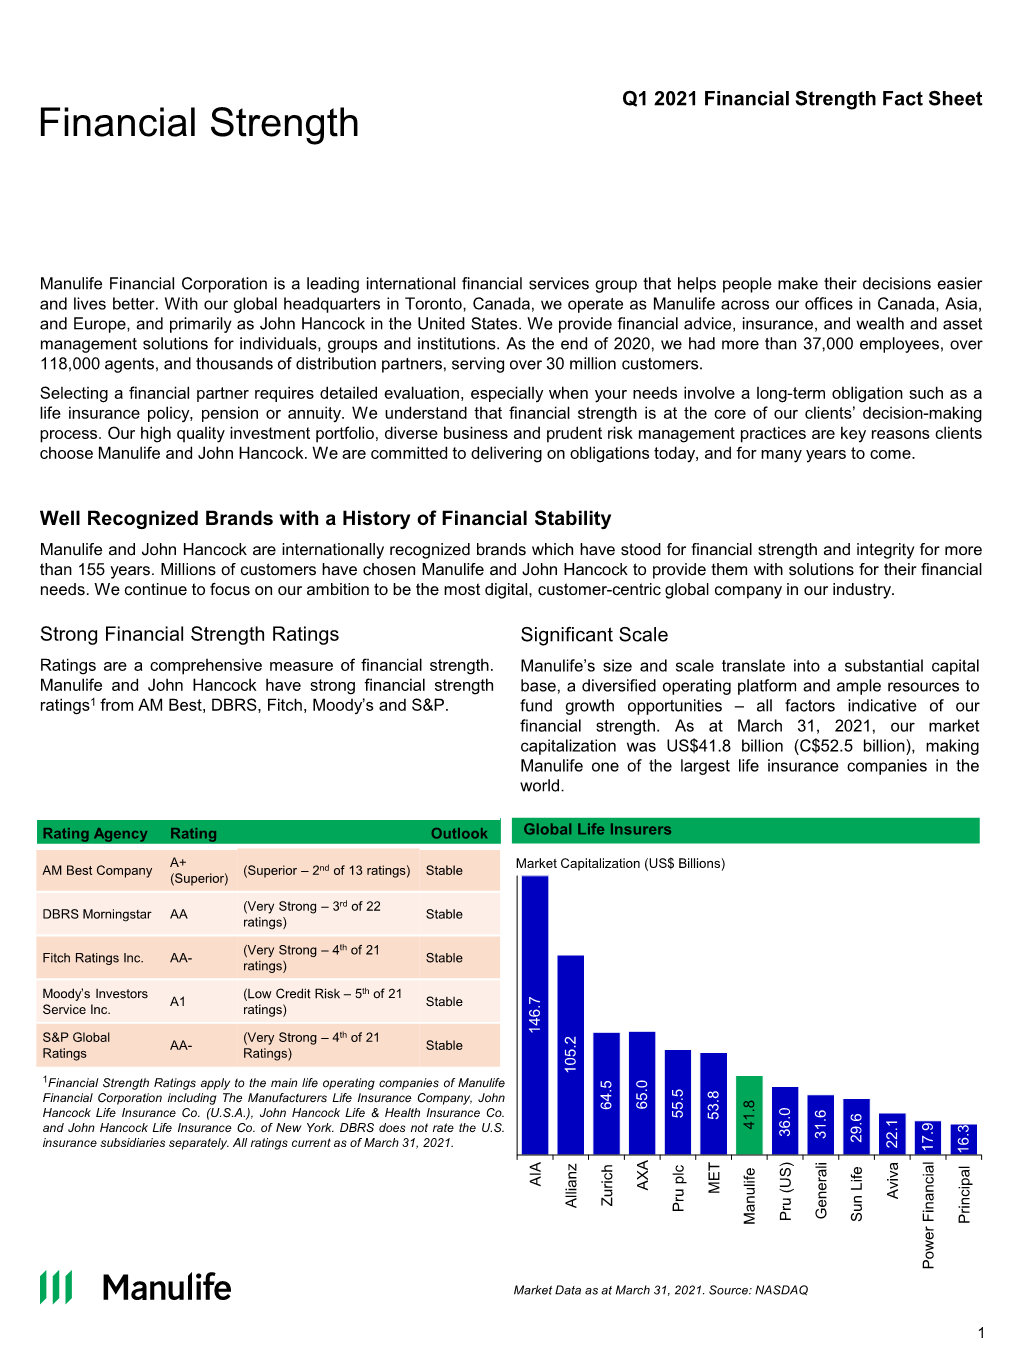 Financial Strength Fact Sheet Financial Strength